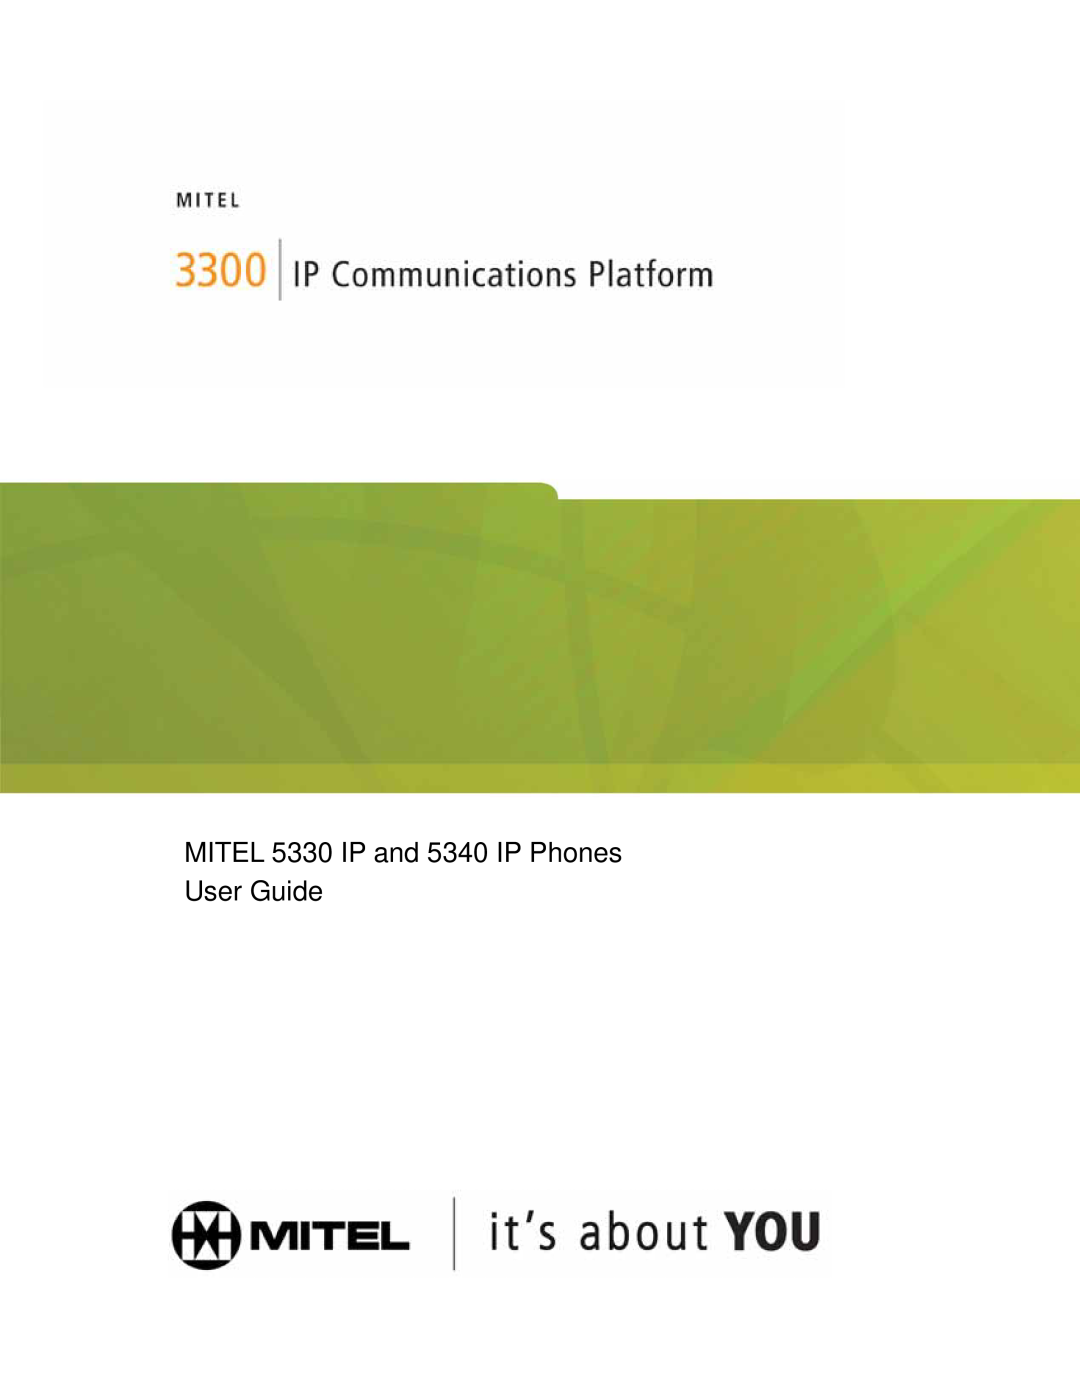 Mitel manual Communications Director Platform, ACD AGENT GUIDE FOR THE MITEL 5320/5330/5340 IP PHONES, Mitel 